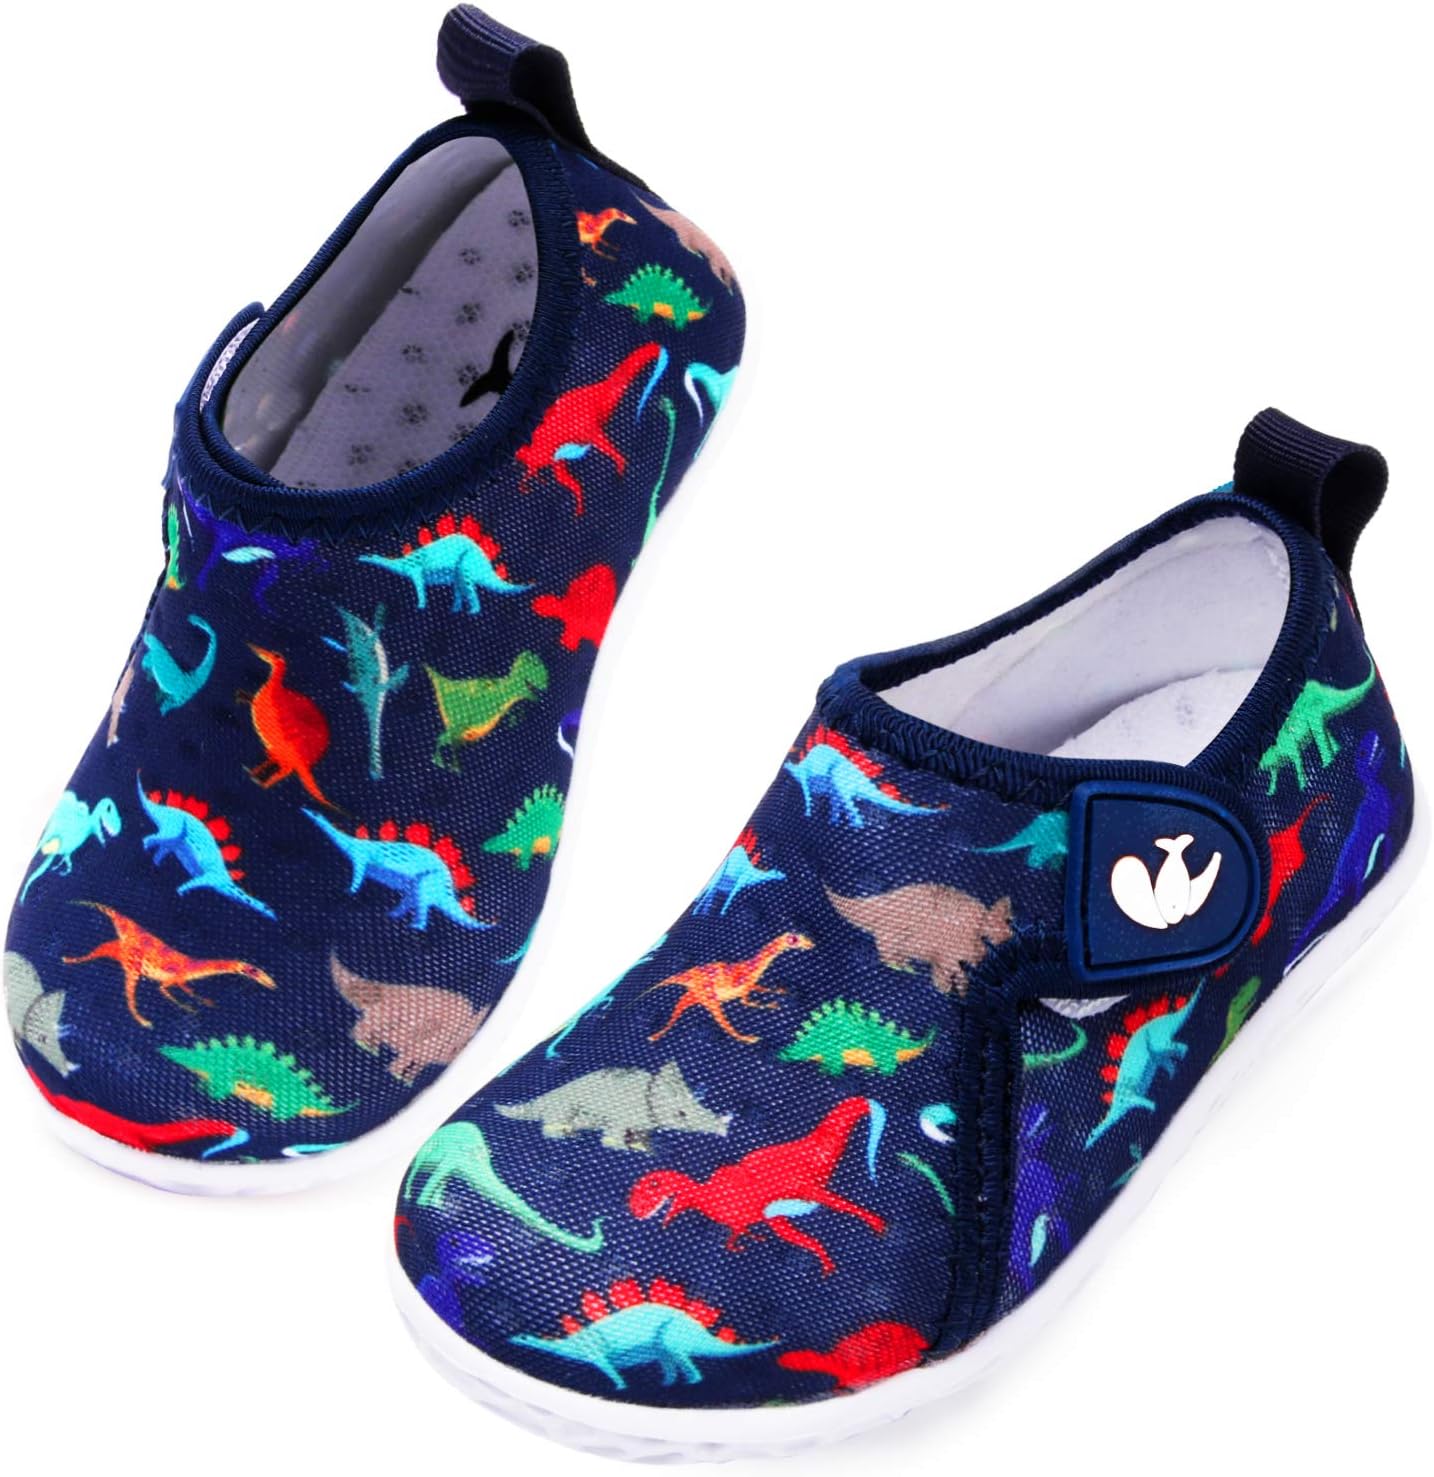 JIASUQI Baby Boys Girls Barefoot Swim Pool Water Shoes Beach Walking Sandals Athletic Sneakers